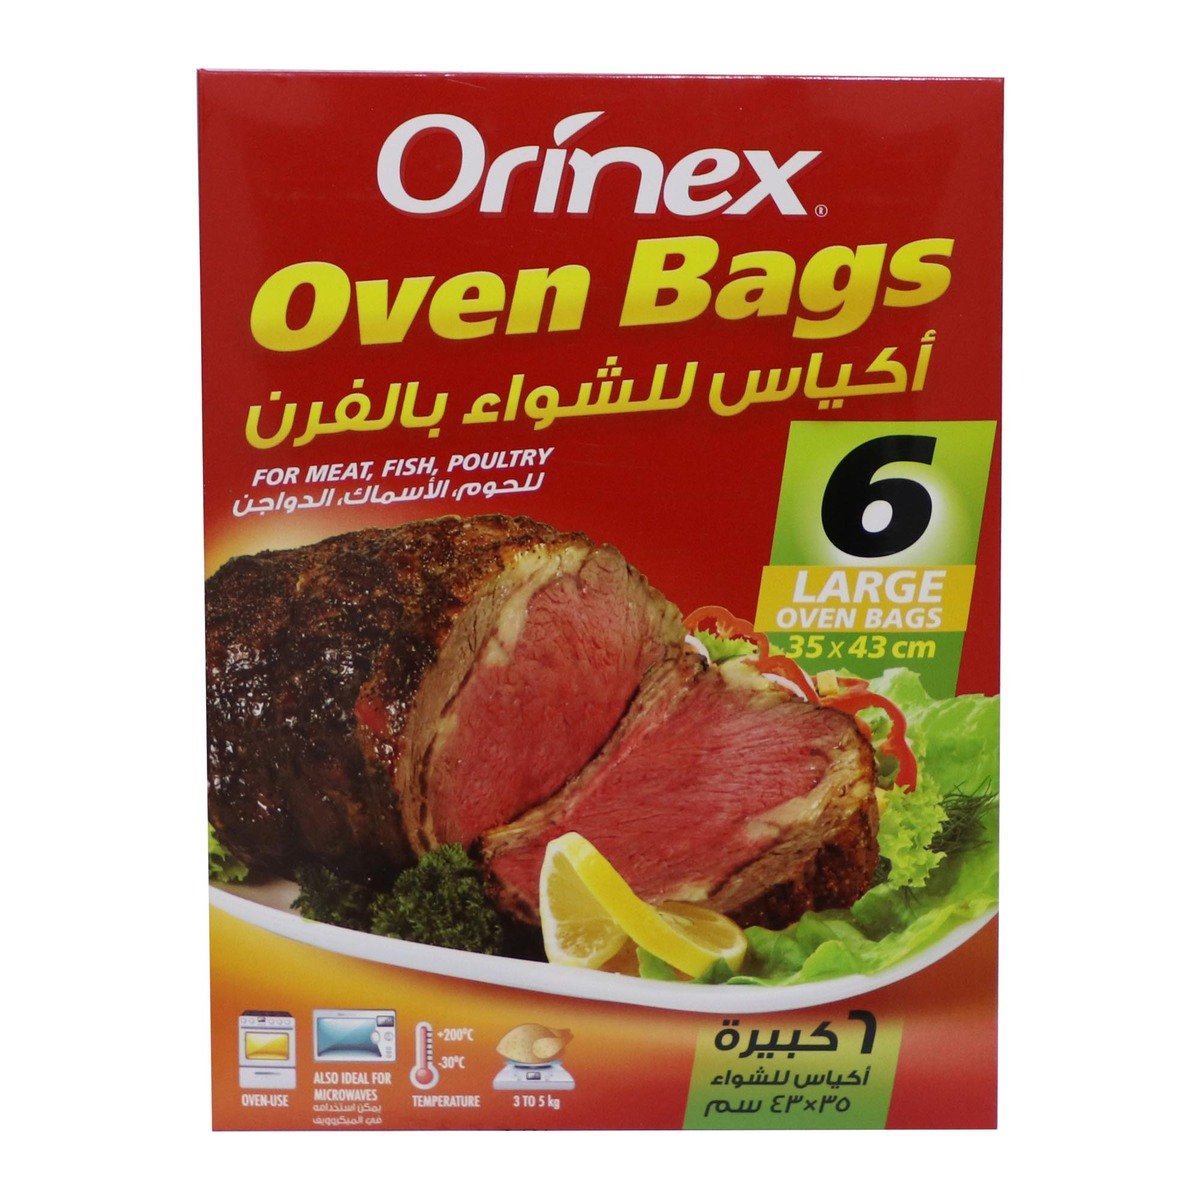 Orinex Oven Bags Large Size 35 x 73cm 6pcs